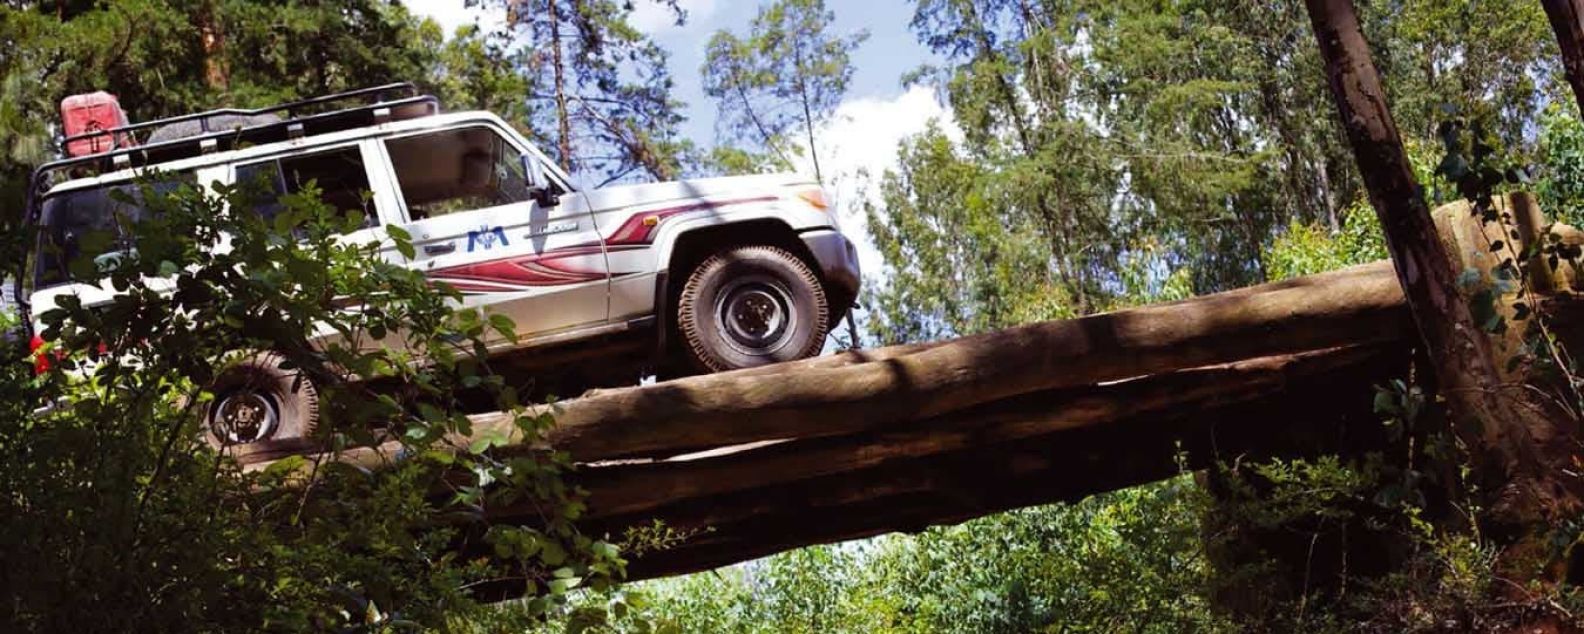 Company SUV crossing a wooden tree branch bridge